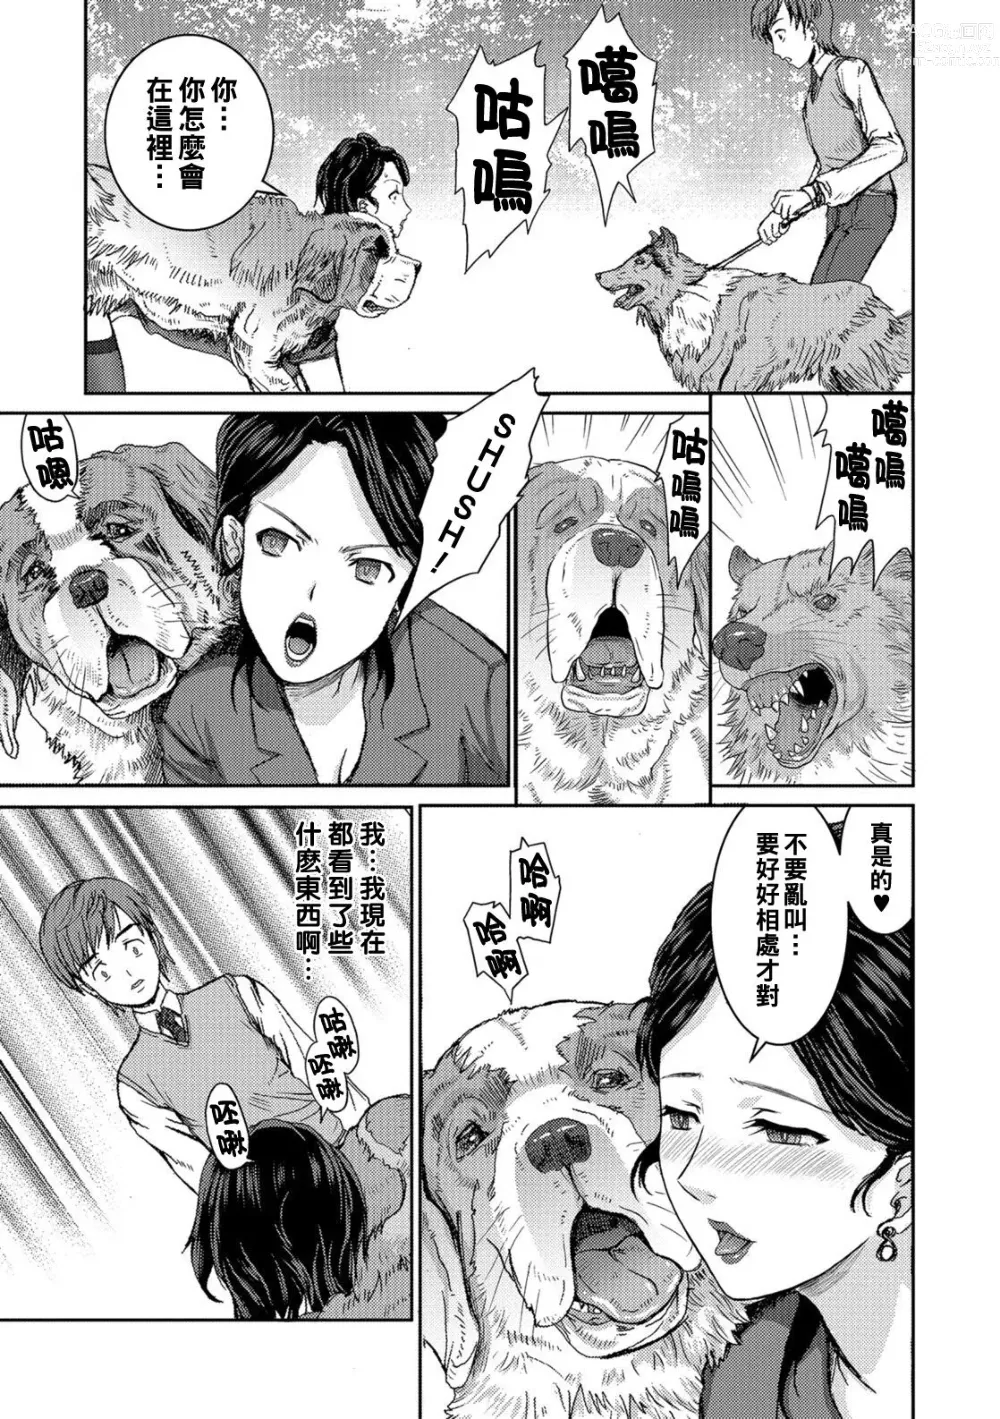 Page 9 of manga Honoguraki Mori no Reizoku -The SUIT and DOG-